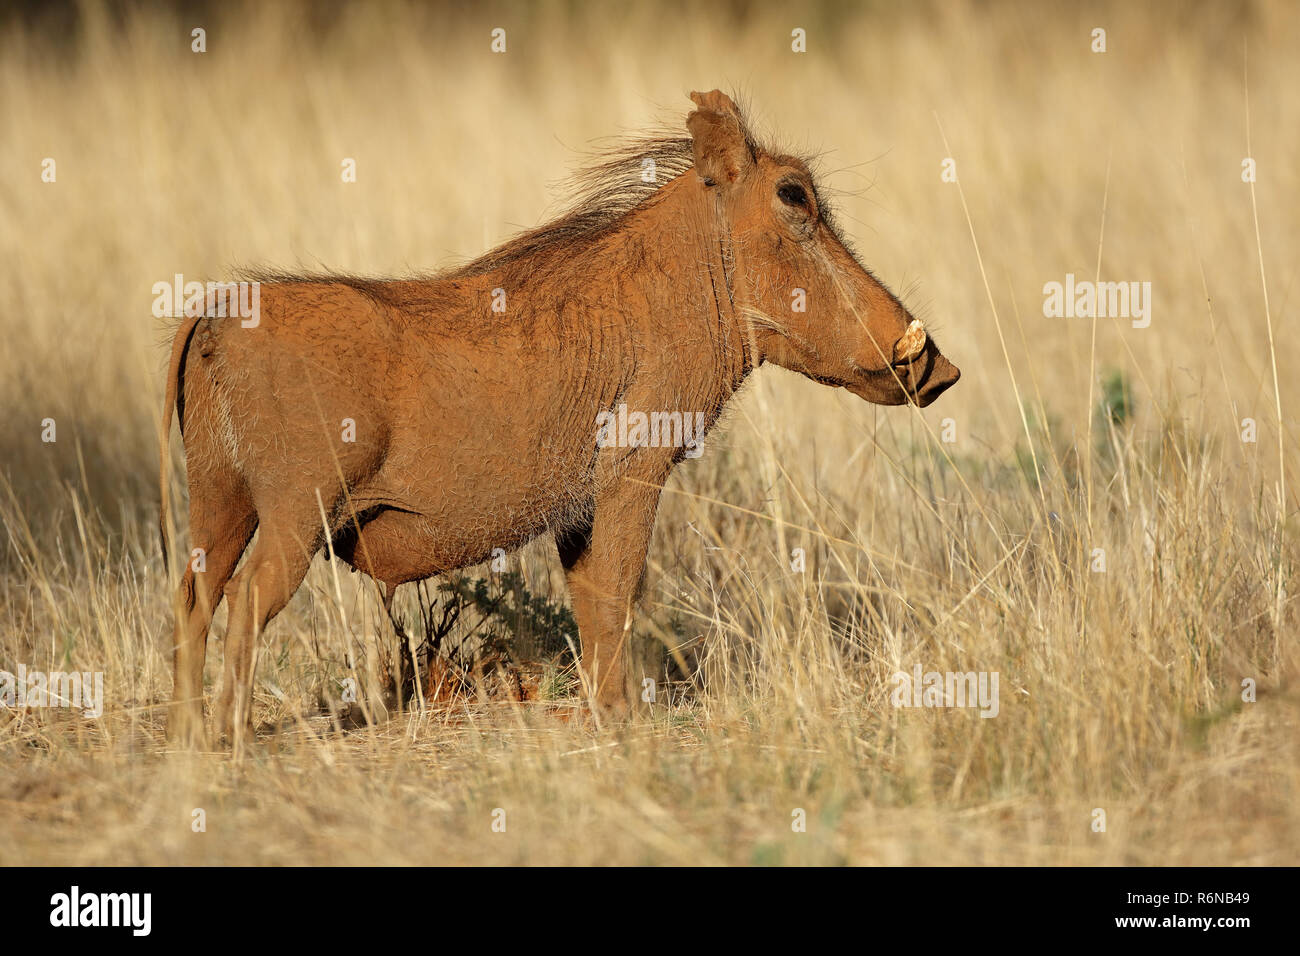 Warthog in natural habitat Stock Photo